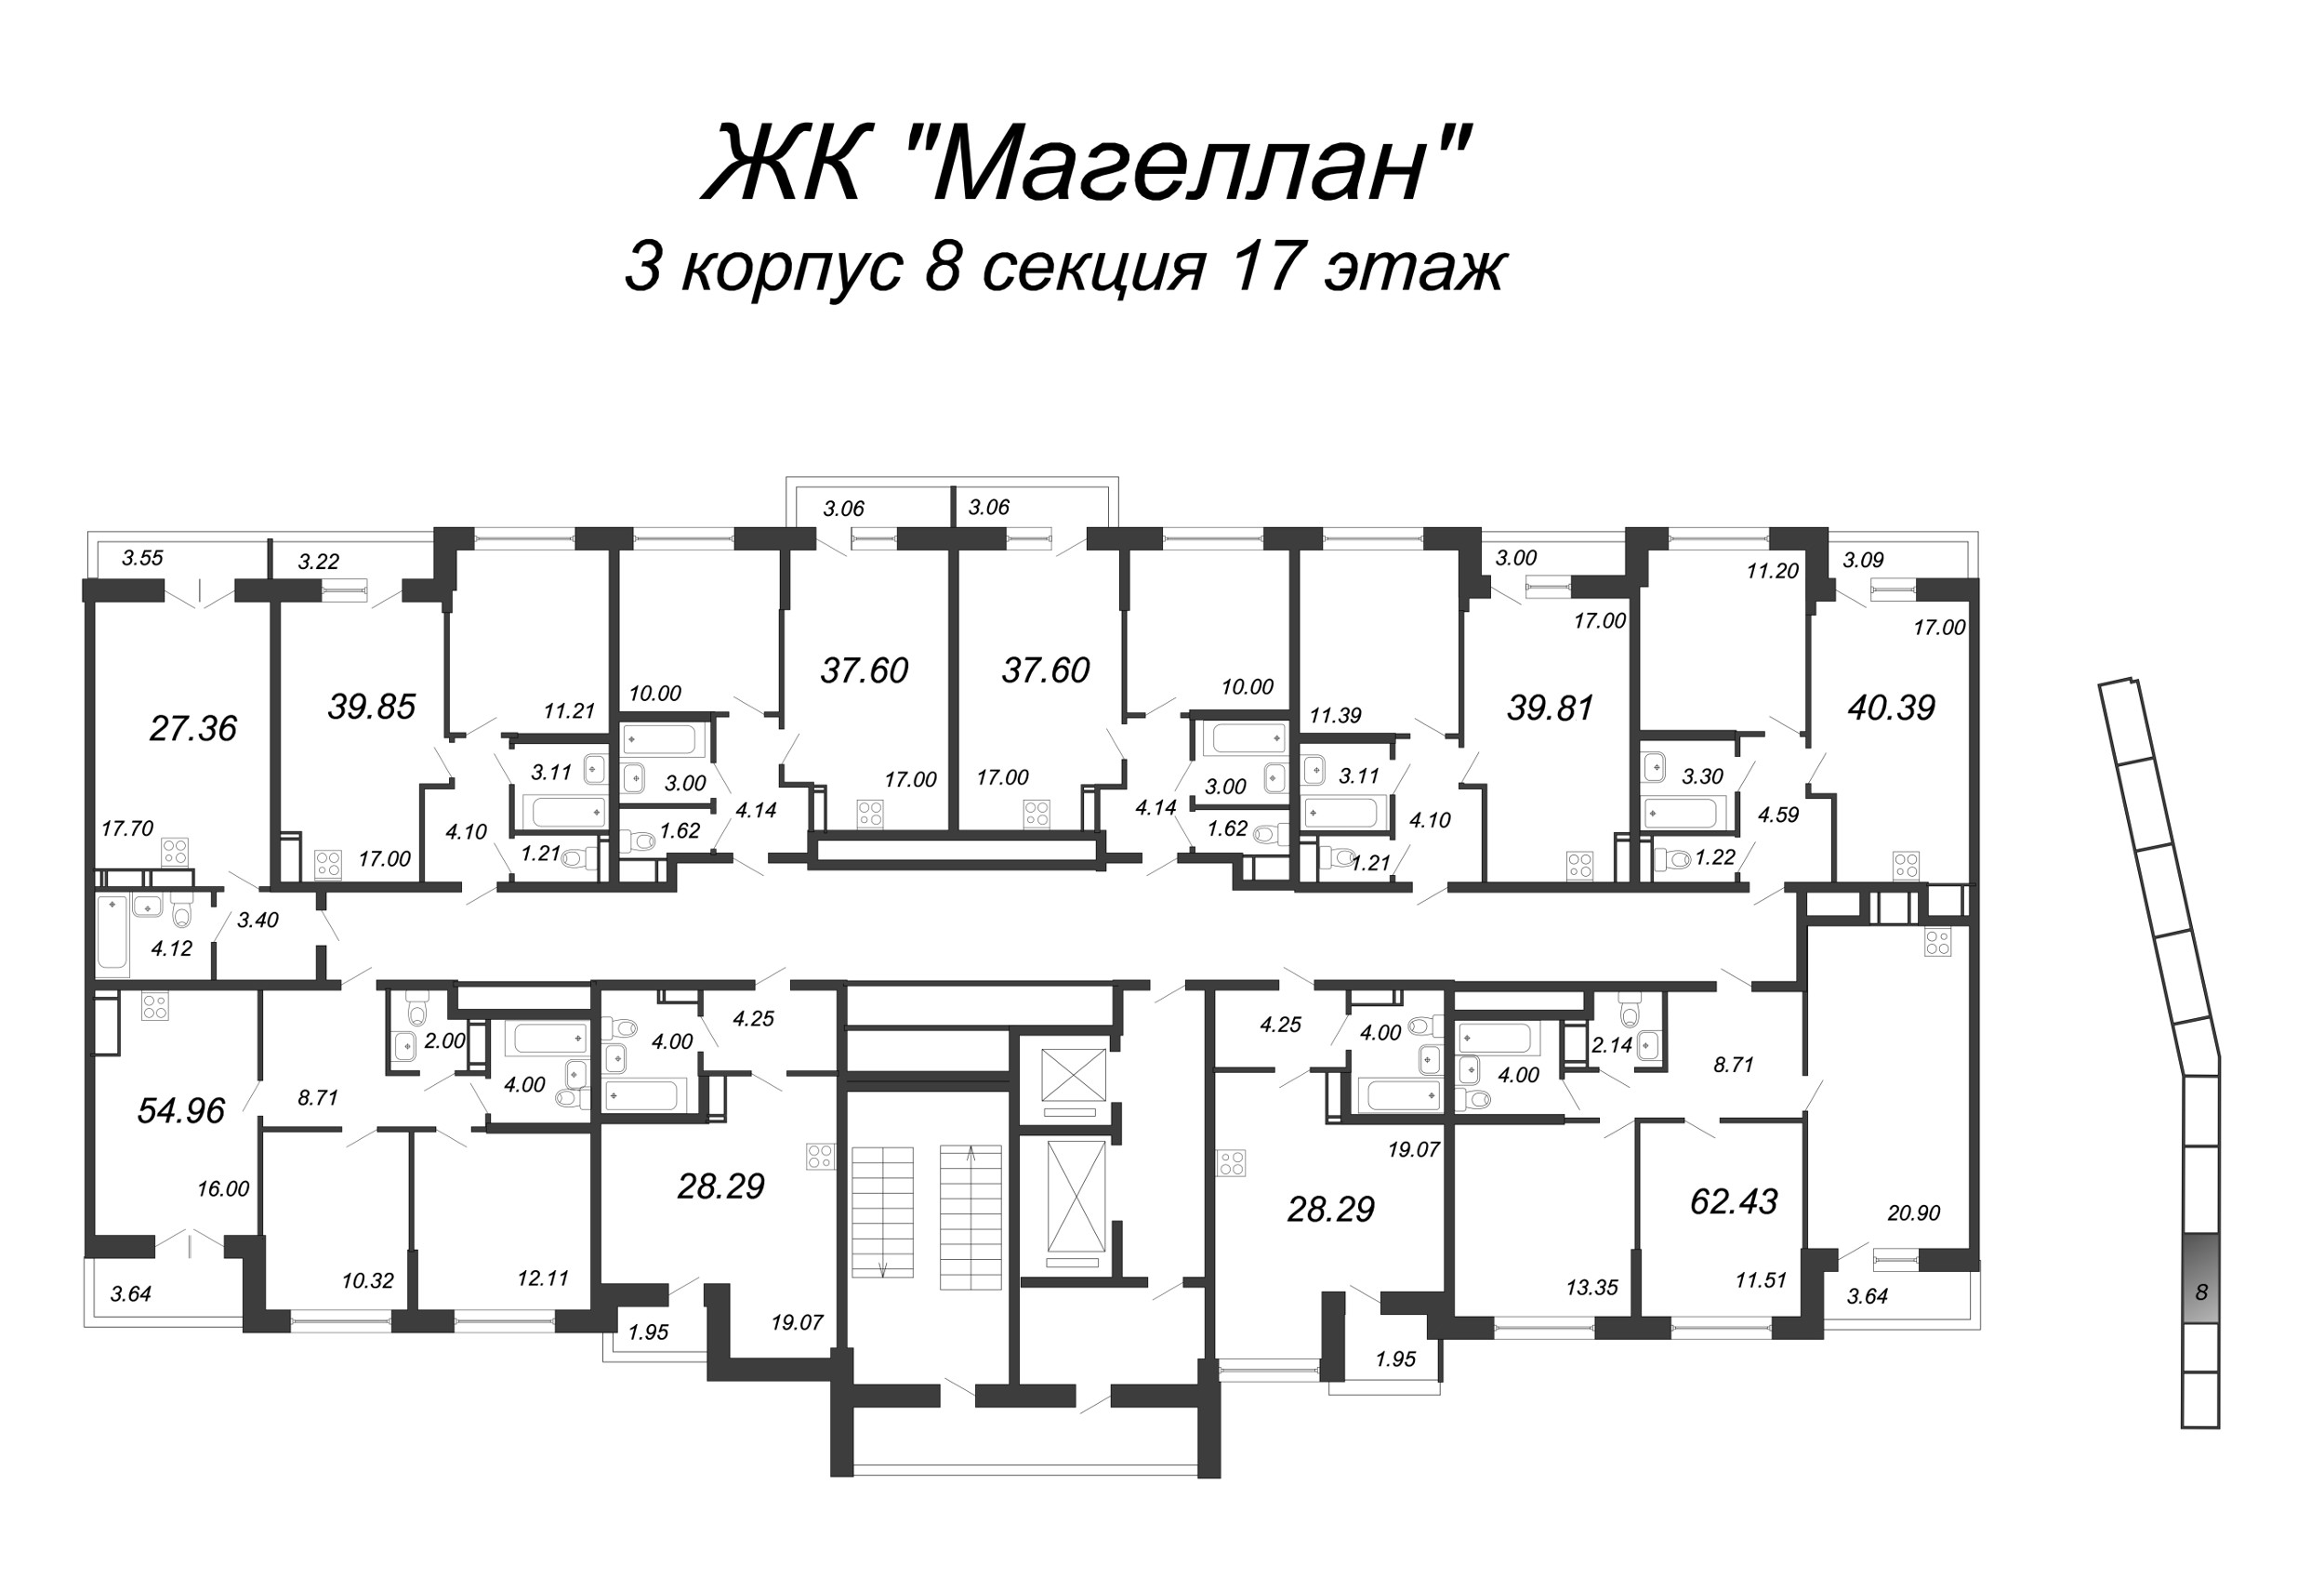 3-комнатная (Евро) квартира, 55.9 м² - планировка этажа